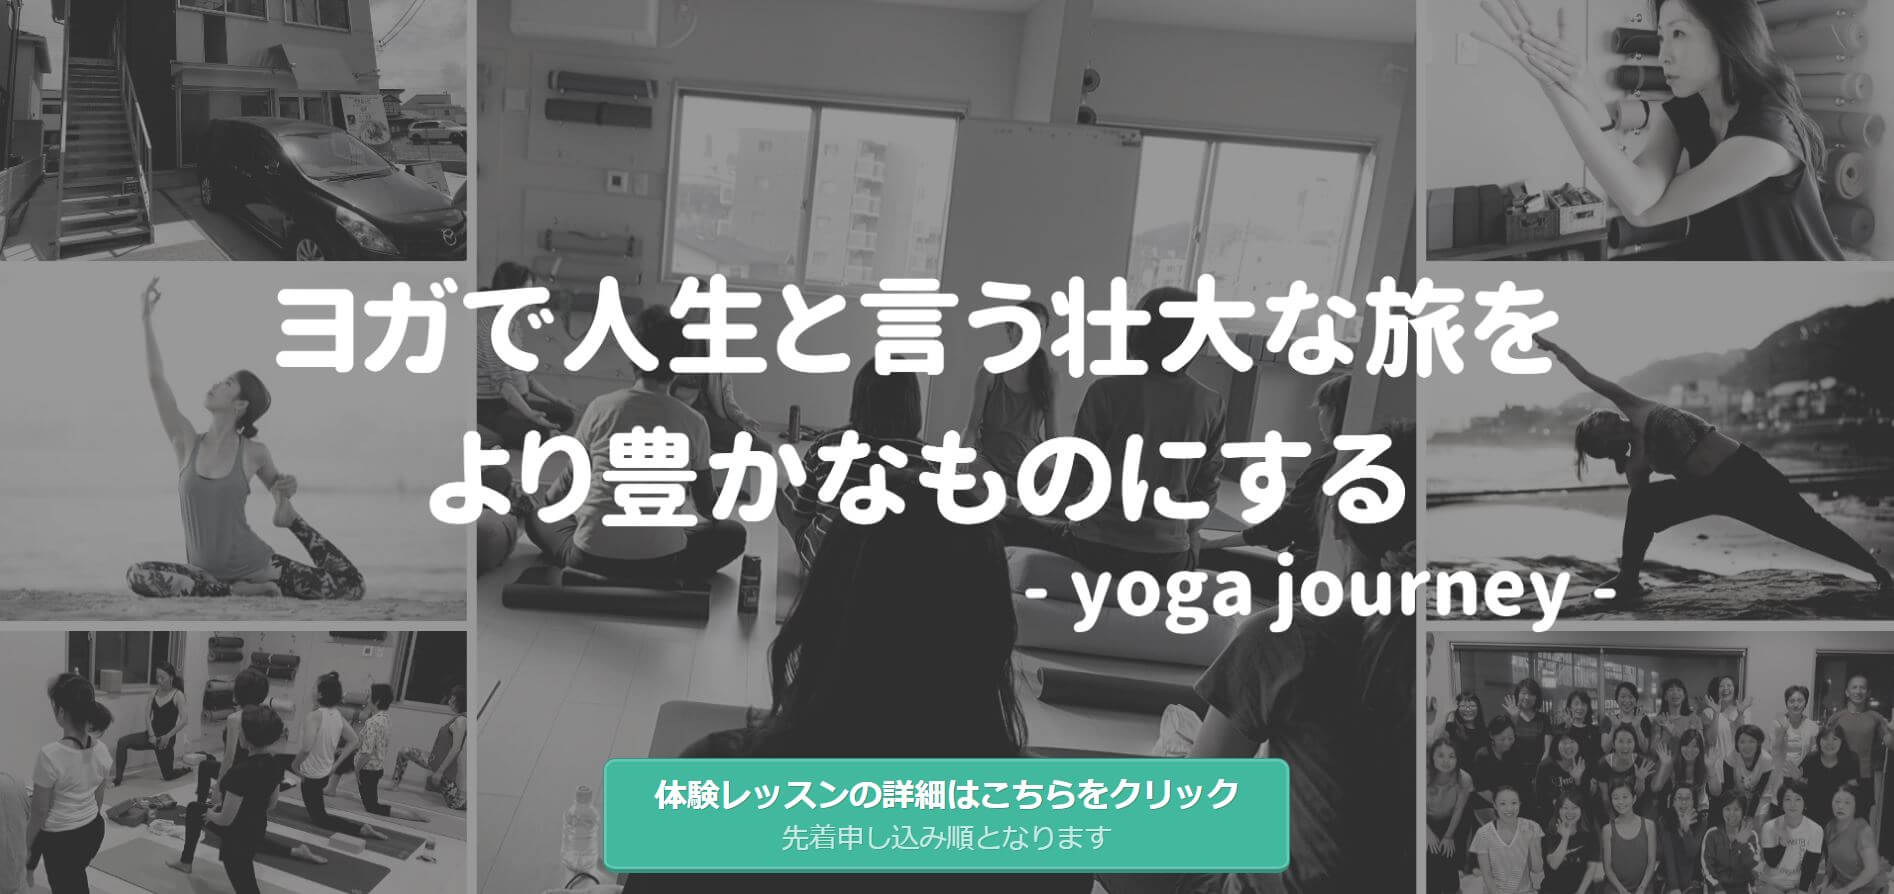 yoga journey(ヨガジャーニー)平塚